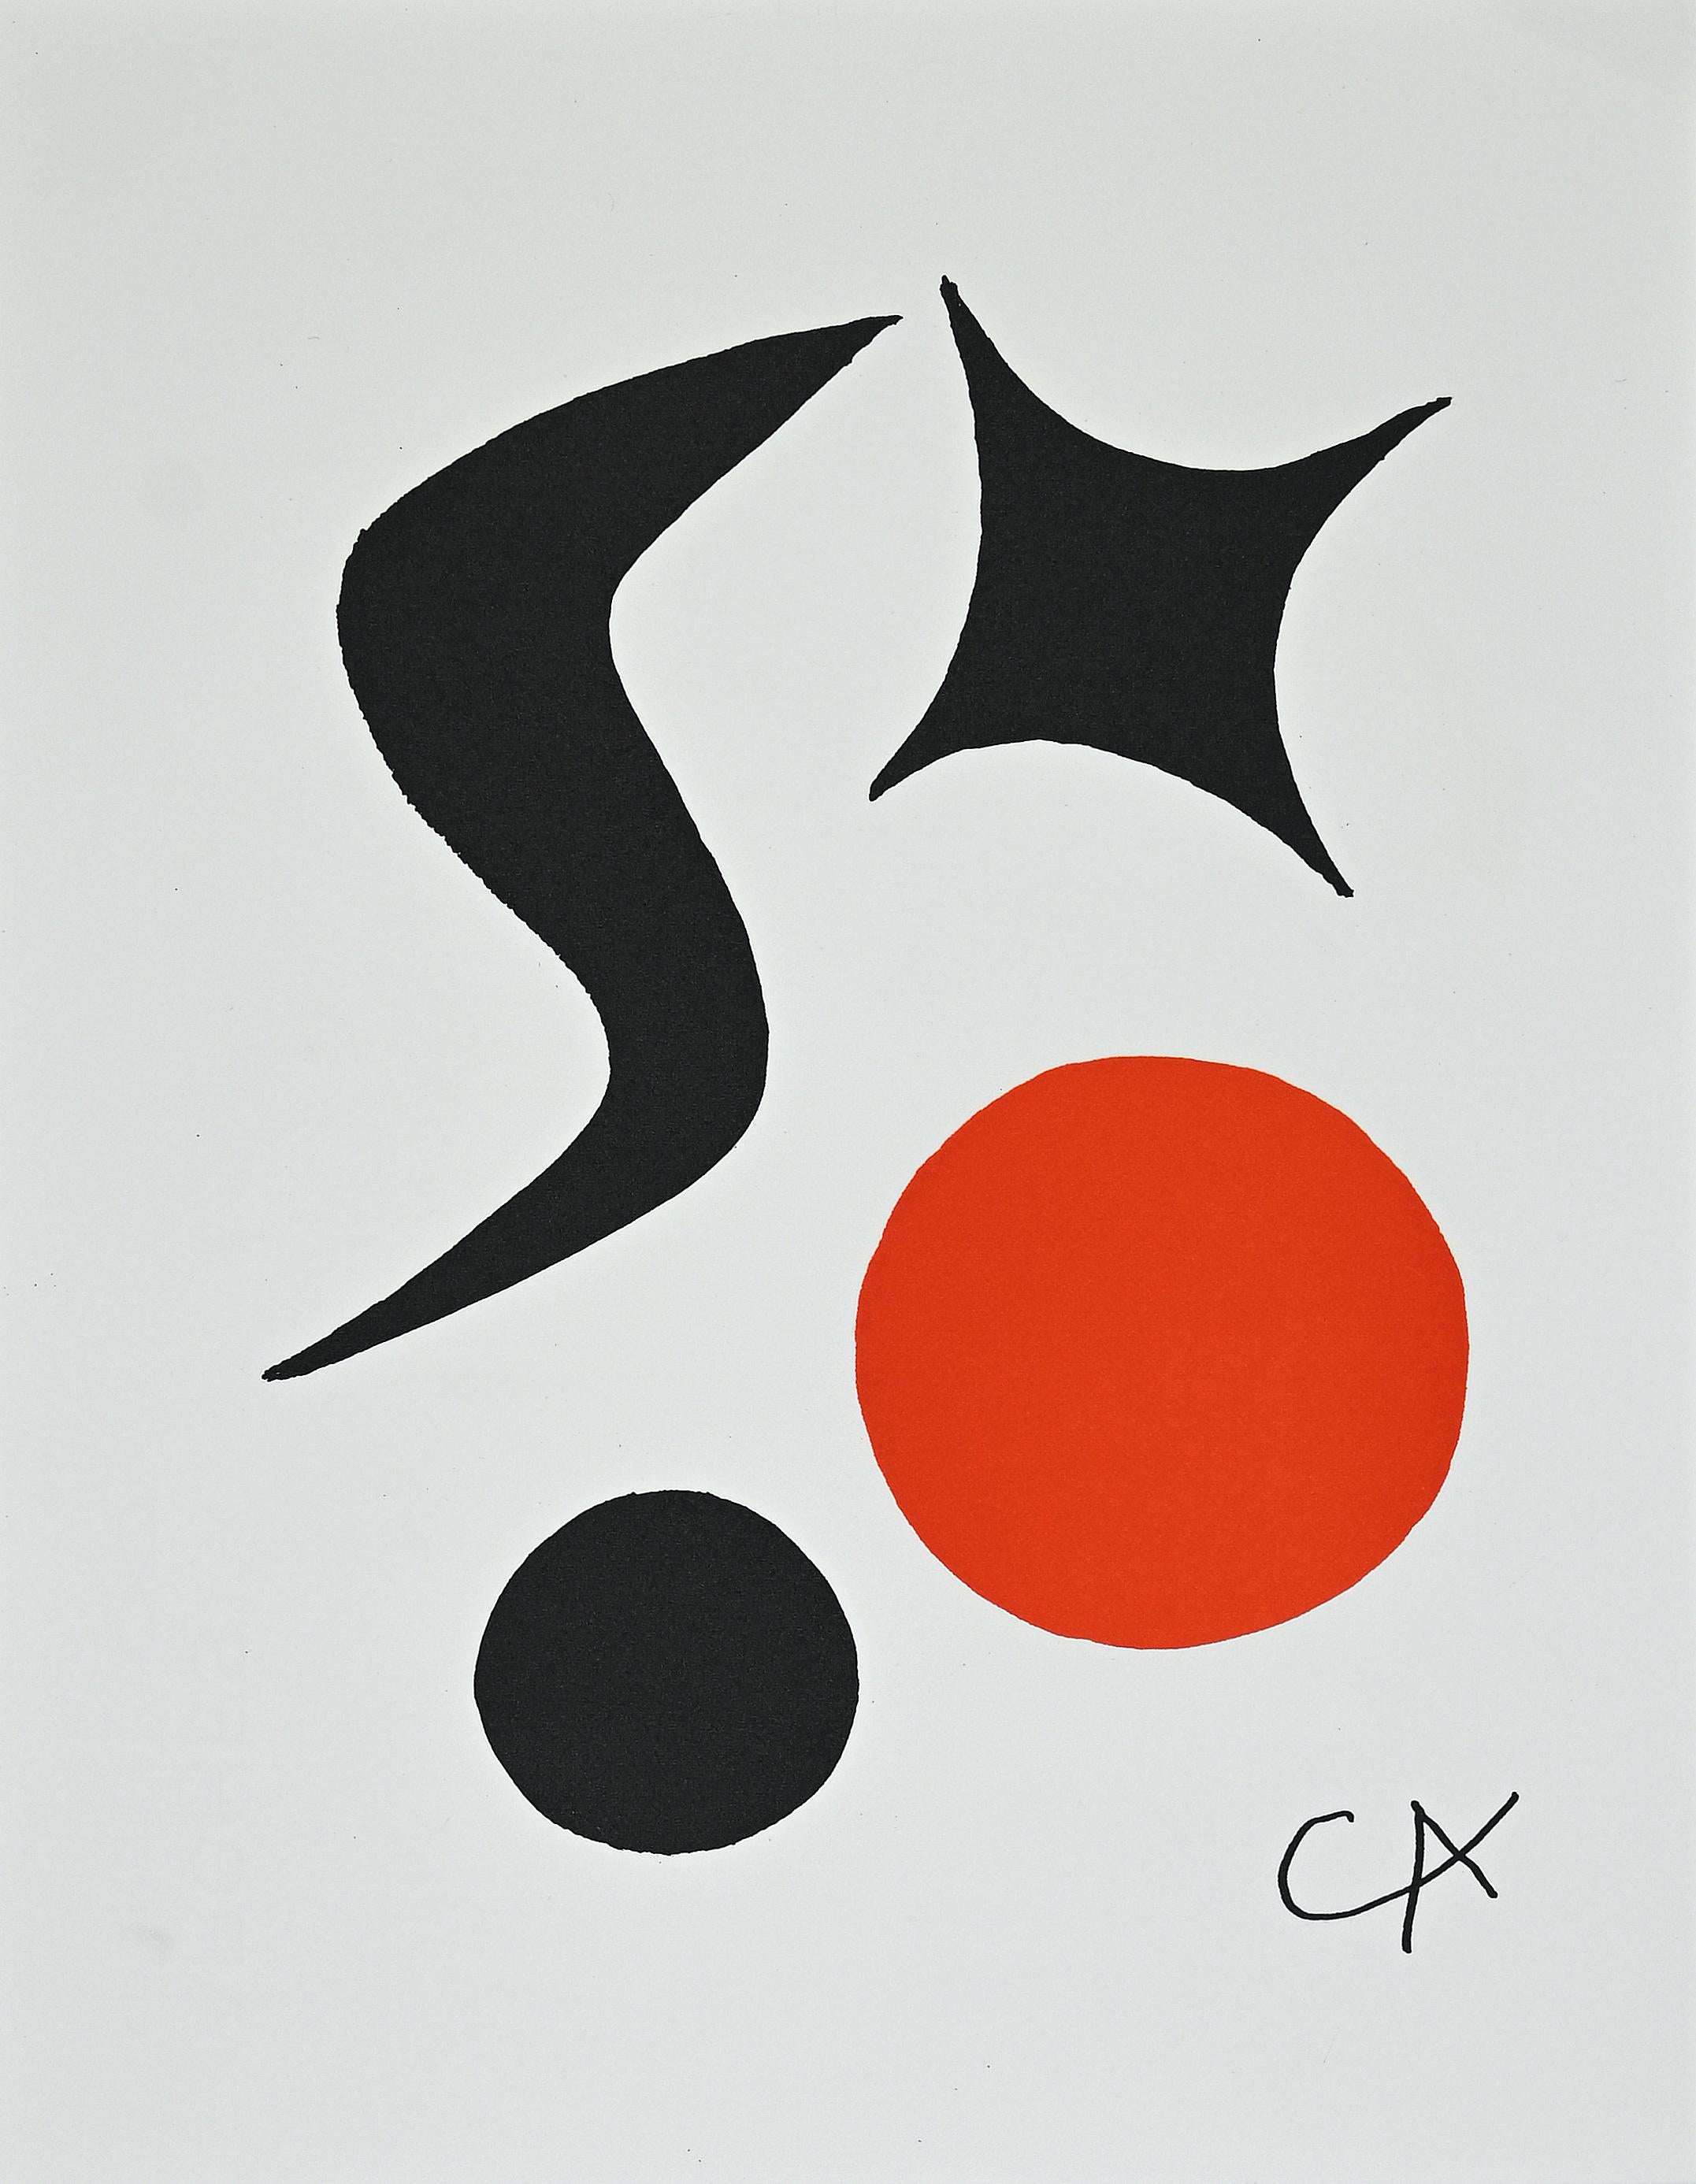 Alexander Calder Abstract Print - Abstract Composition  - Lithograph after A. Calder - 1982